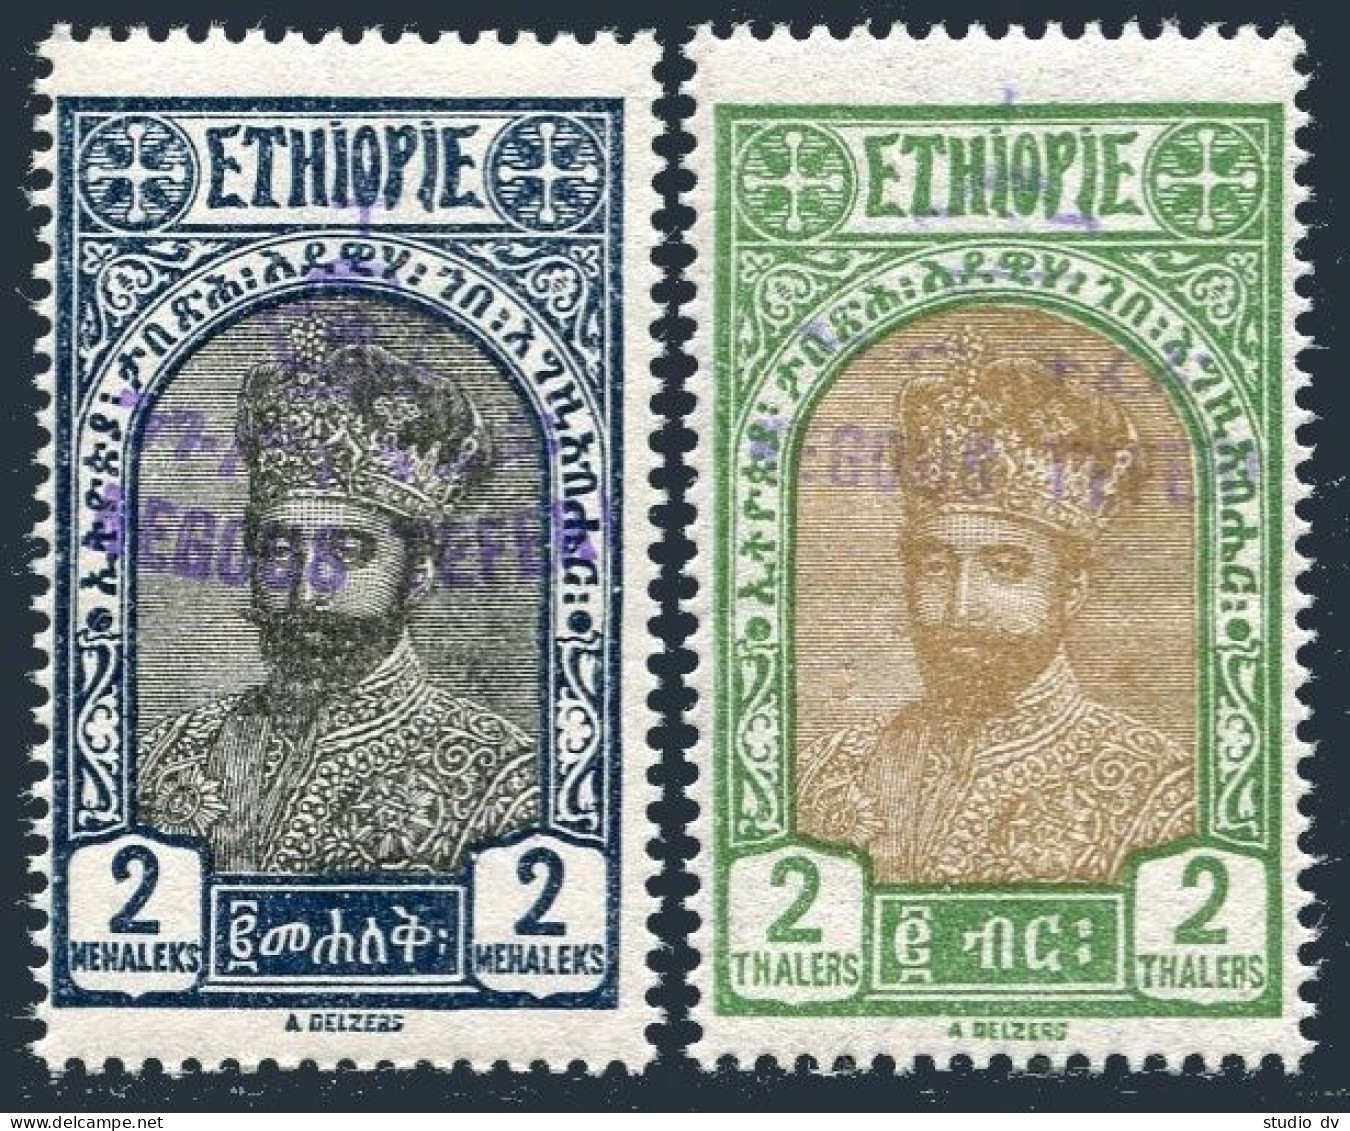 Ethiopia 177V,179V Handstamped, MNH. Michel 118V, 120V. Prince Tafari, 1928. - Ethiopia